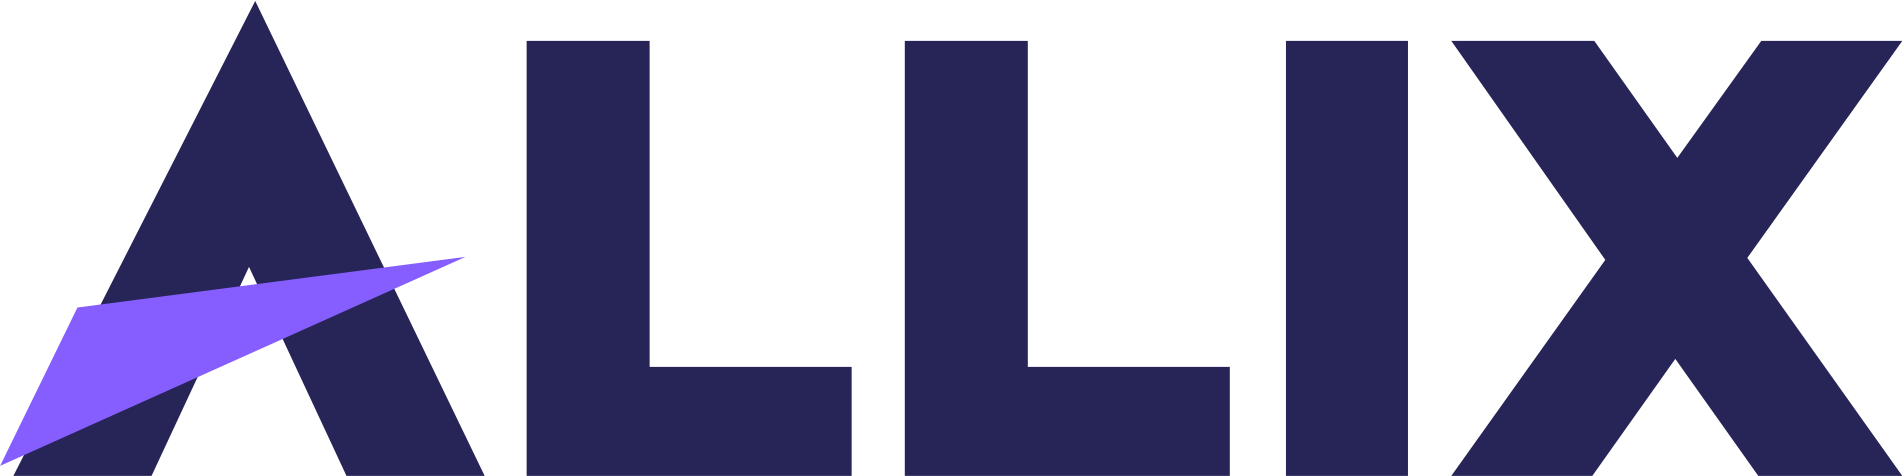 Allix Logo Transparent Blue and Purple